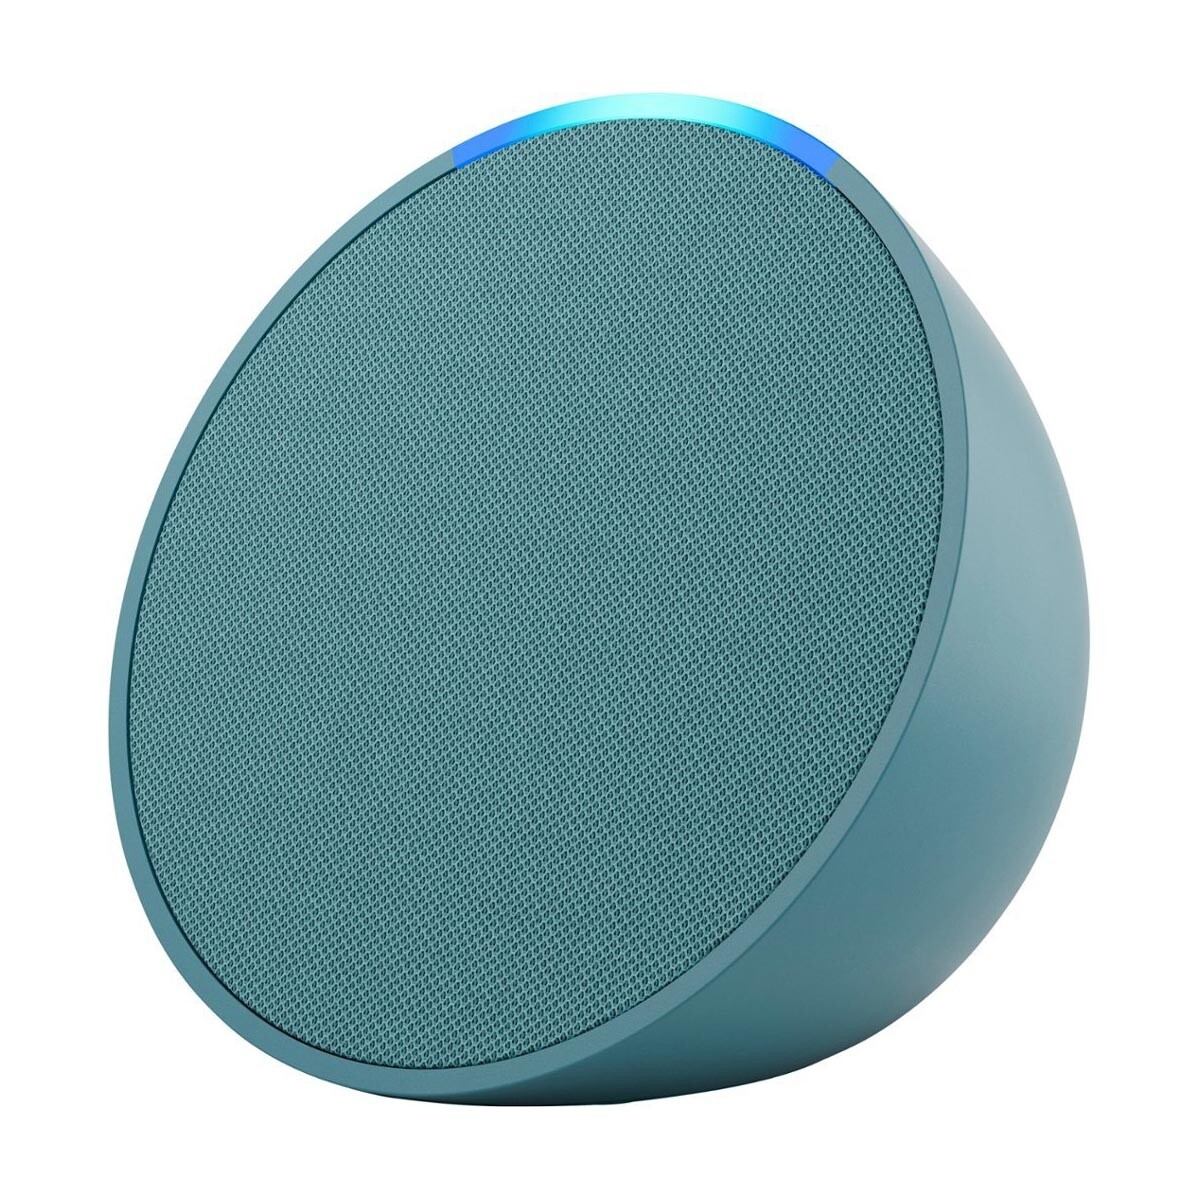 Parlante Smart Amazon Echo Pop (1st Gen) C/ Asistente Virtual Alexa - Midnight teal 